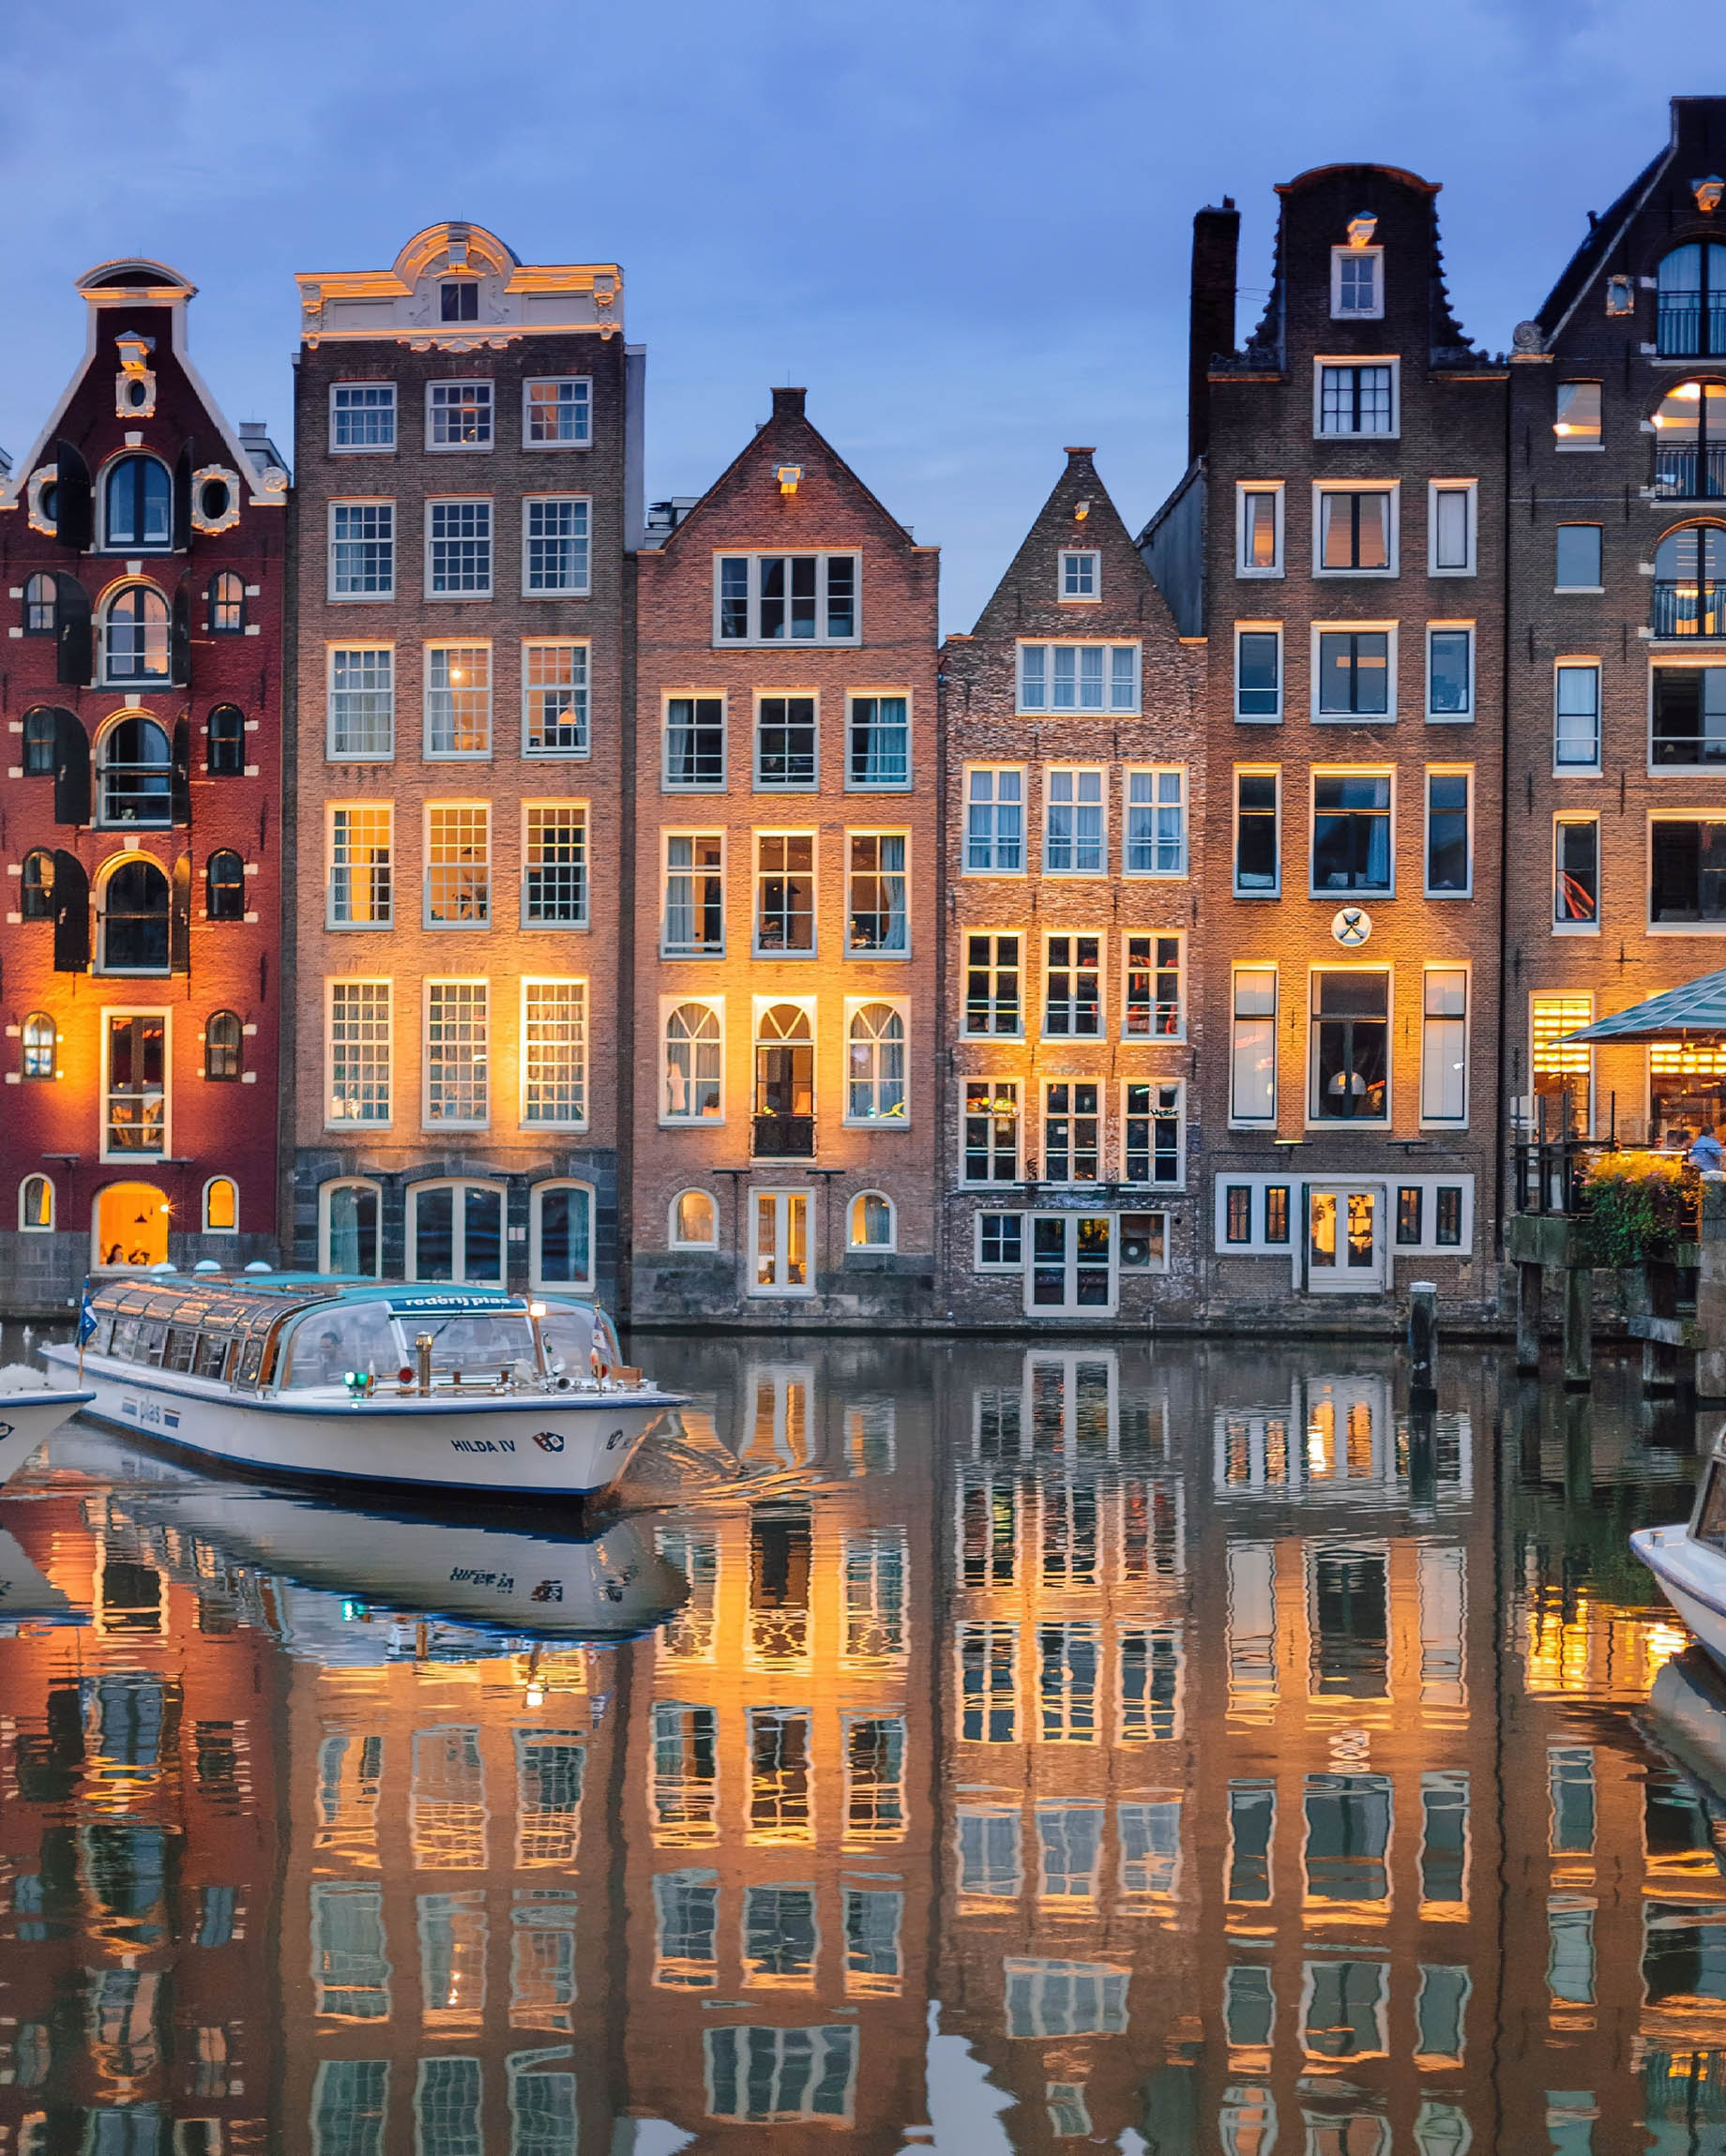 Anantara Grand Hotel Krasnapolsky Amsterdam – Netherlands – Canal